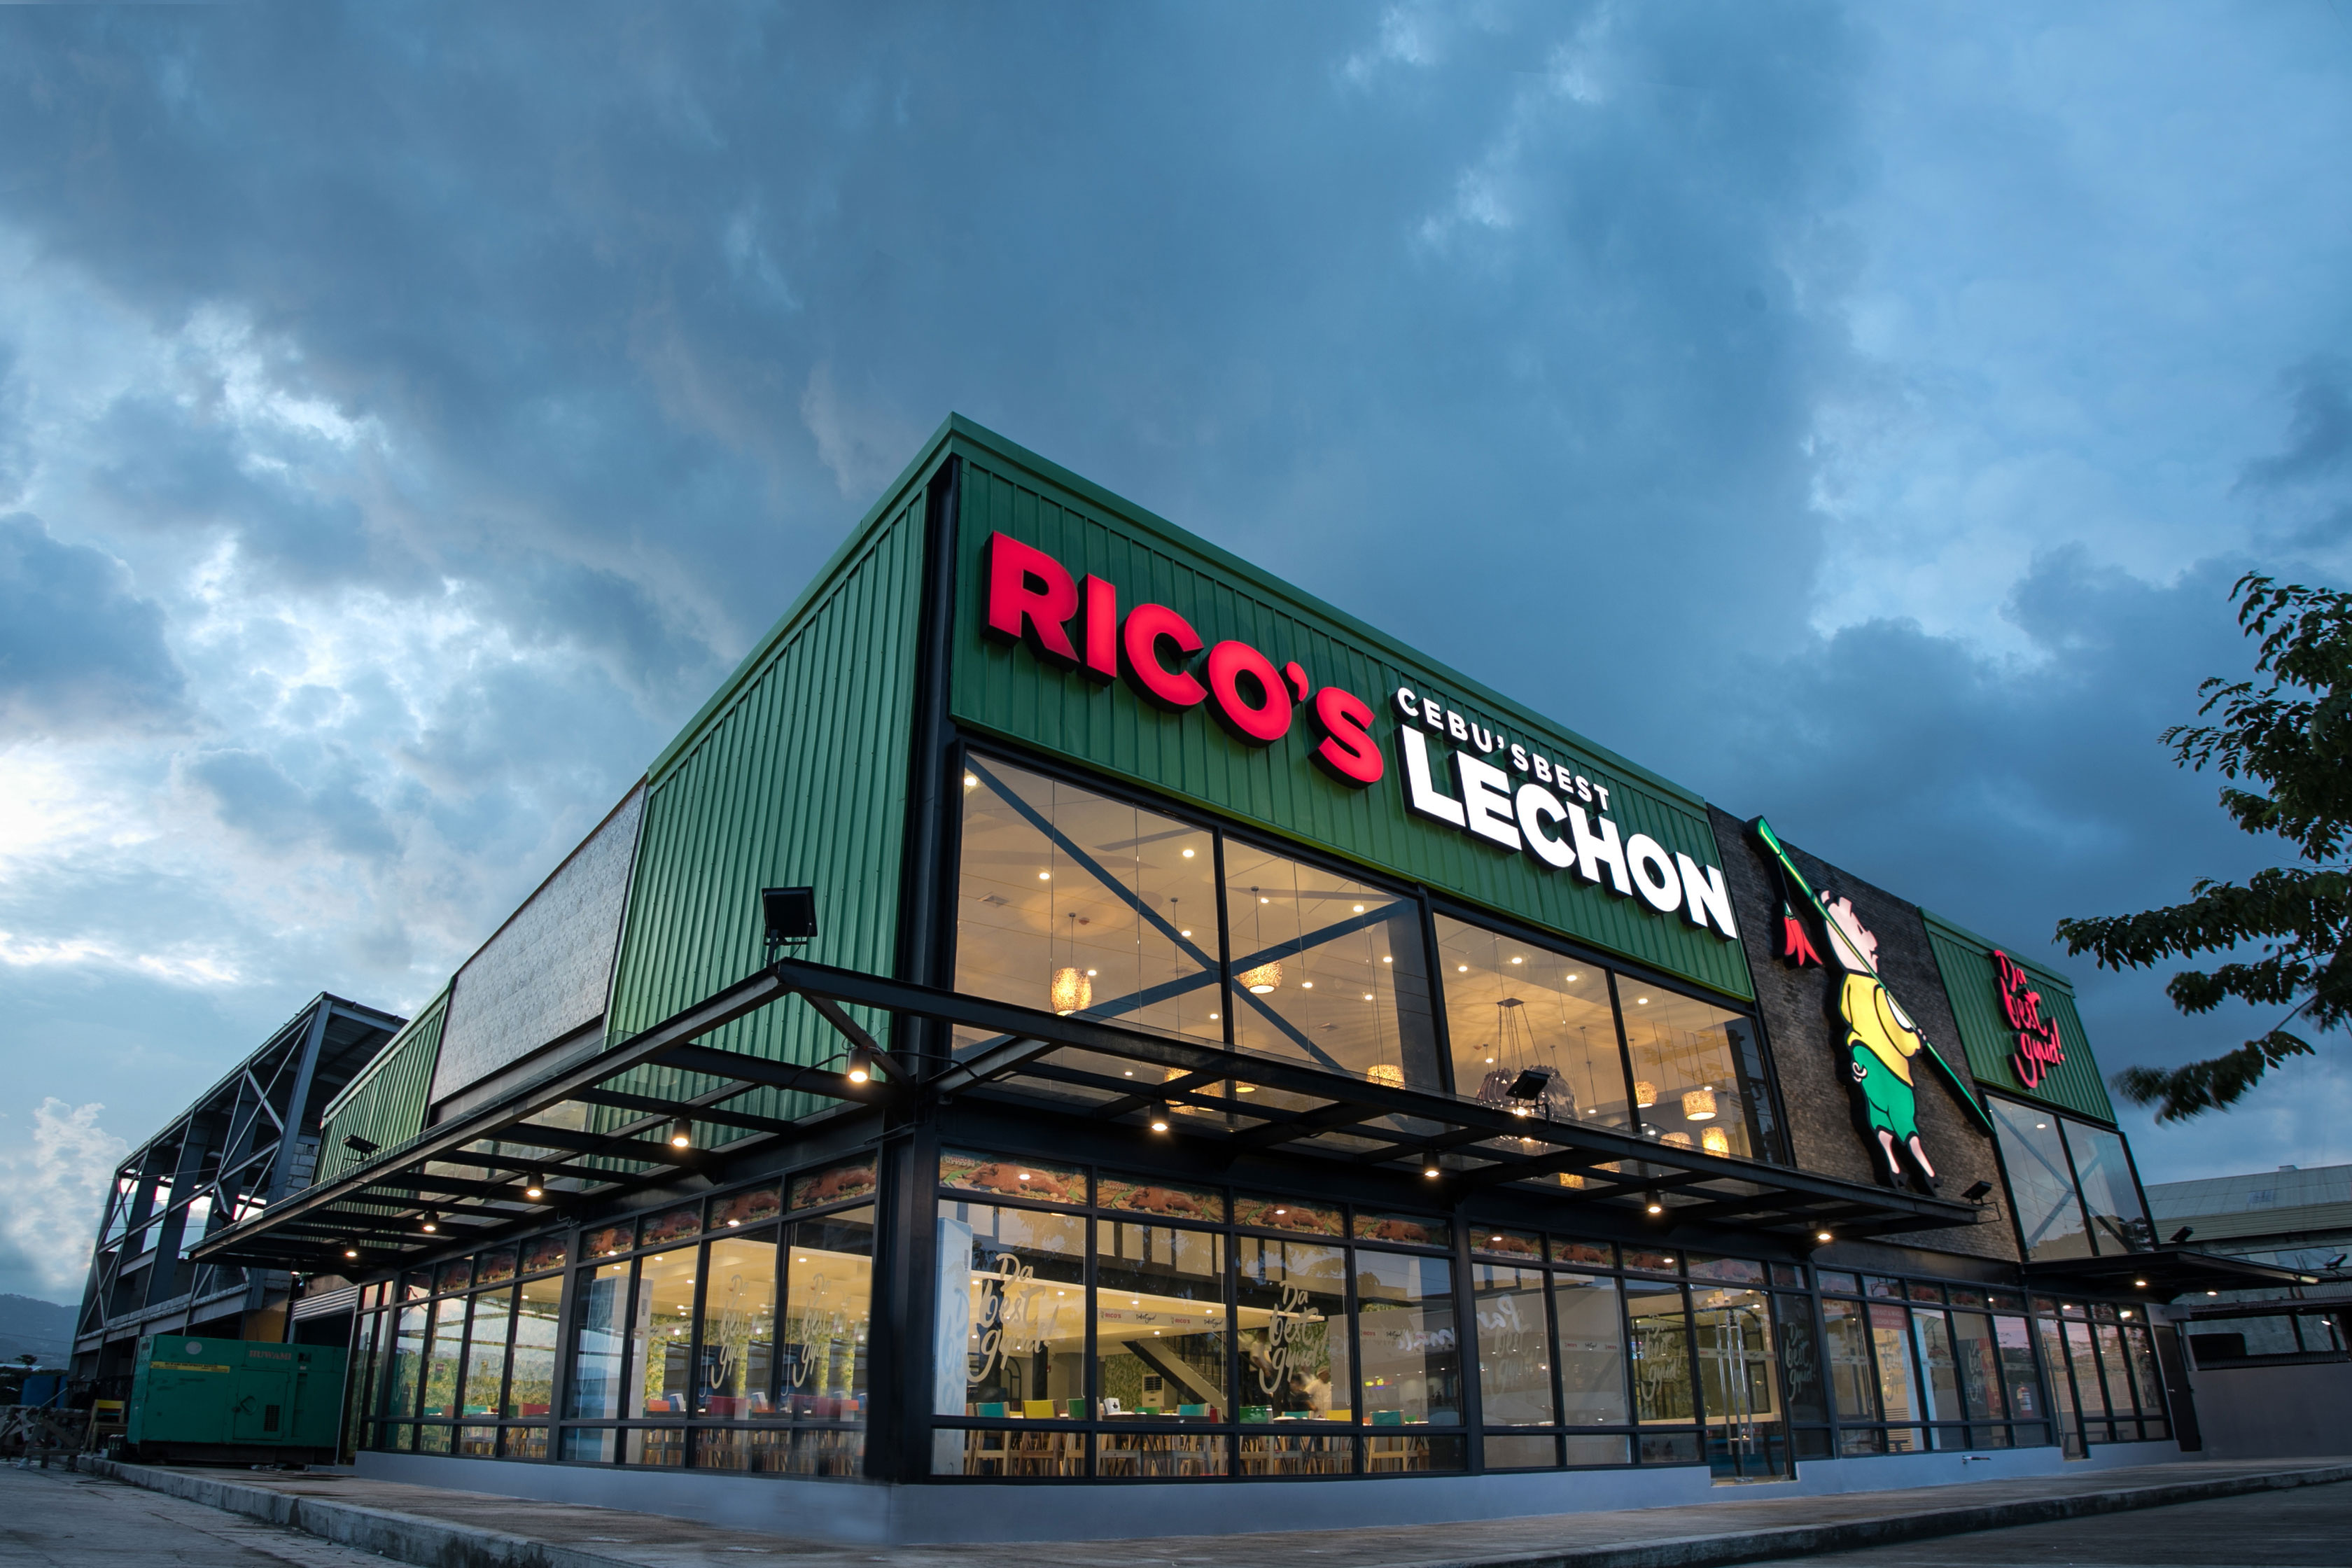 Rico's Lechon Flagship Restaurant